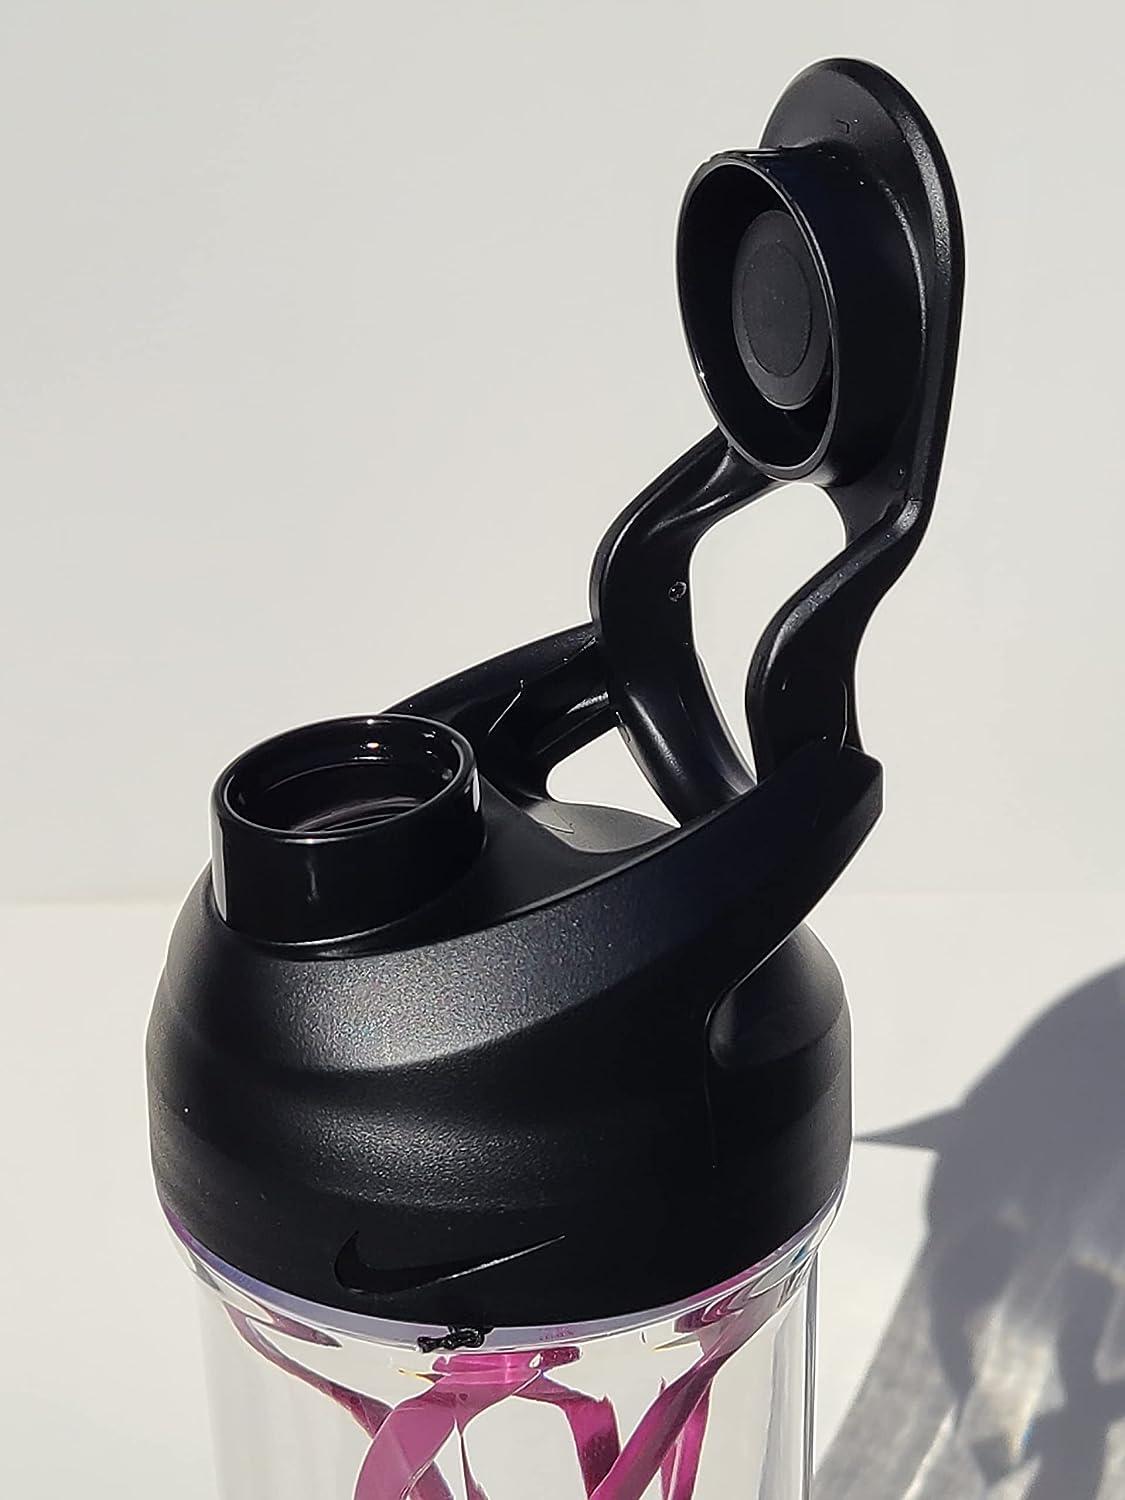  Nike Tr Hypercharge 24 Oz Shaker Bottle Black : Sports &  Outdoors